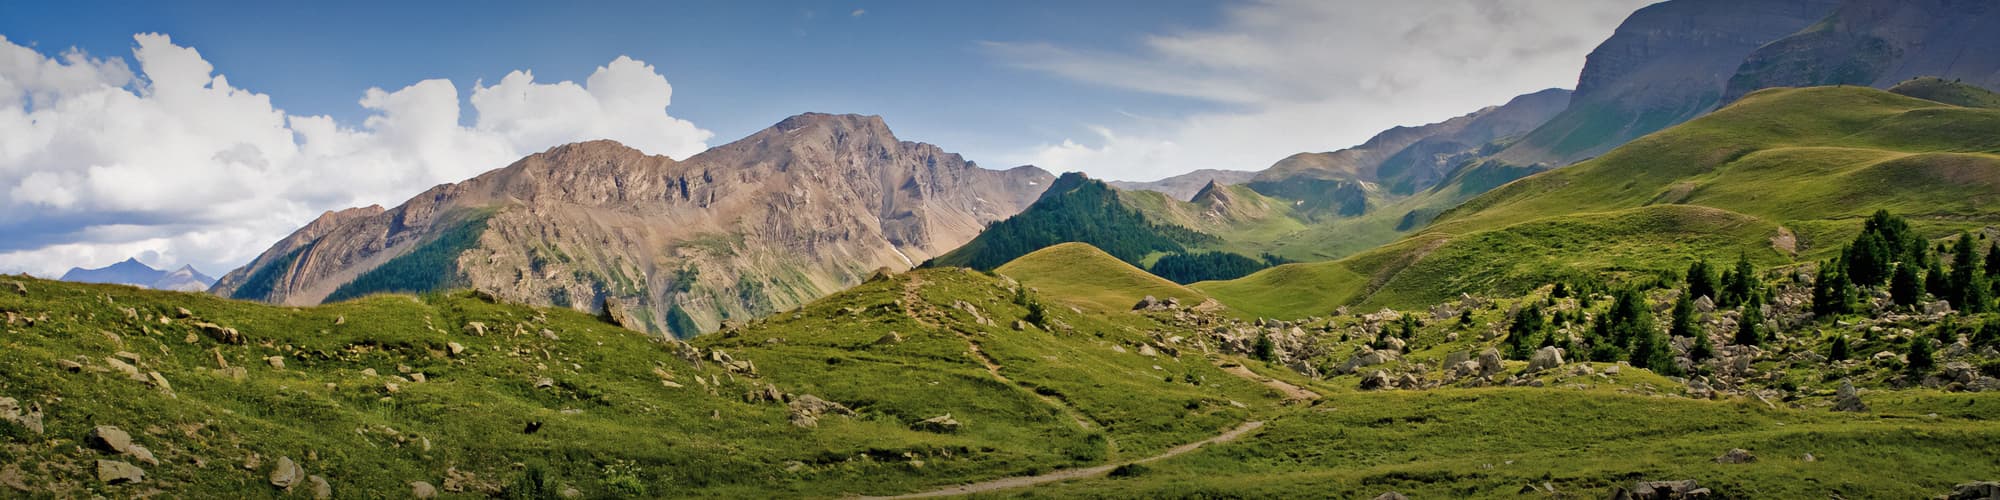 Voyage dans les Alpes du Sud © Uolir / Adobe Stock